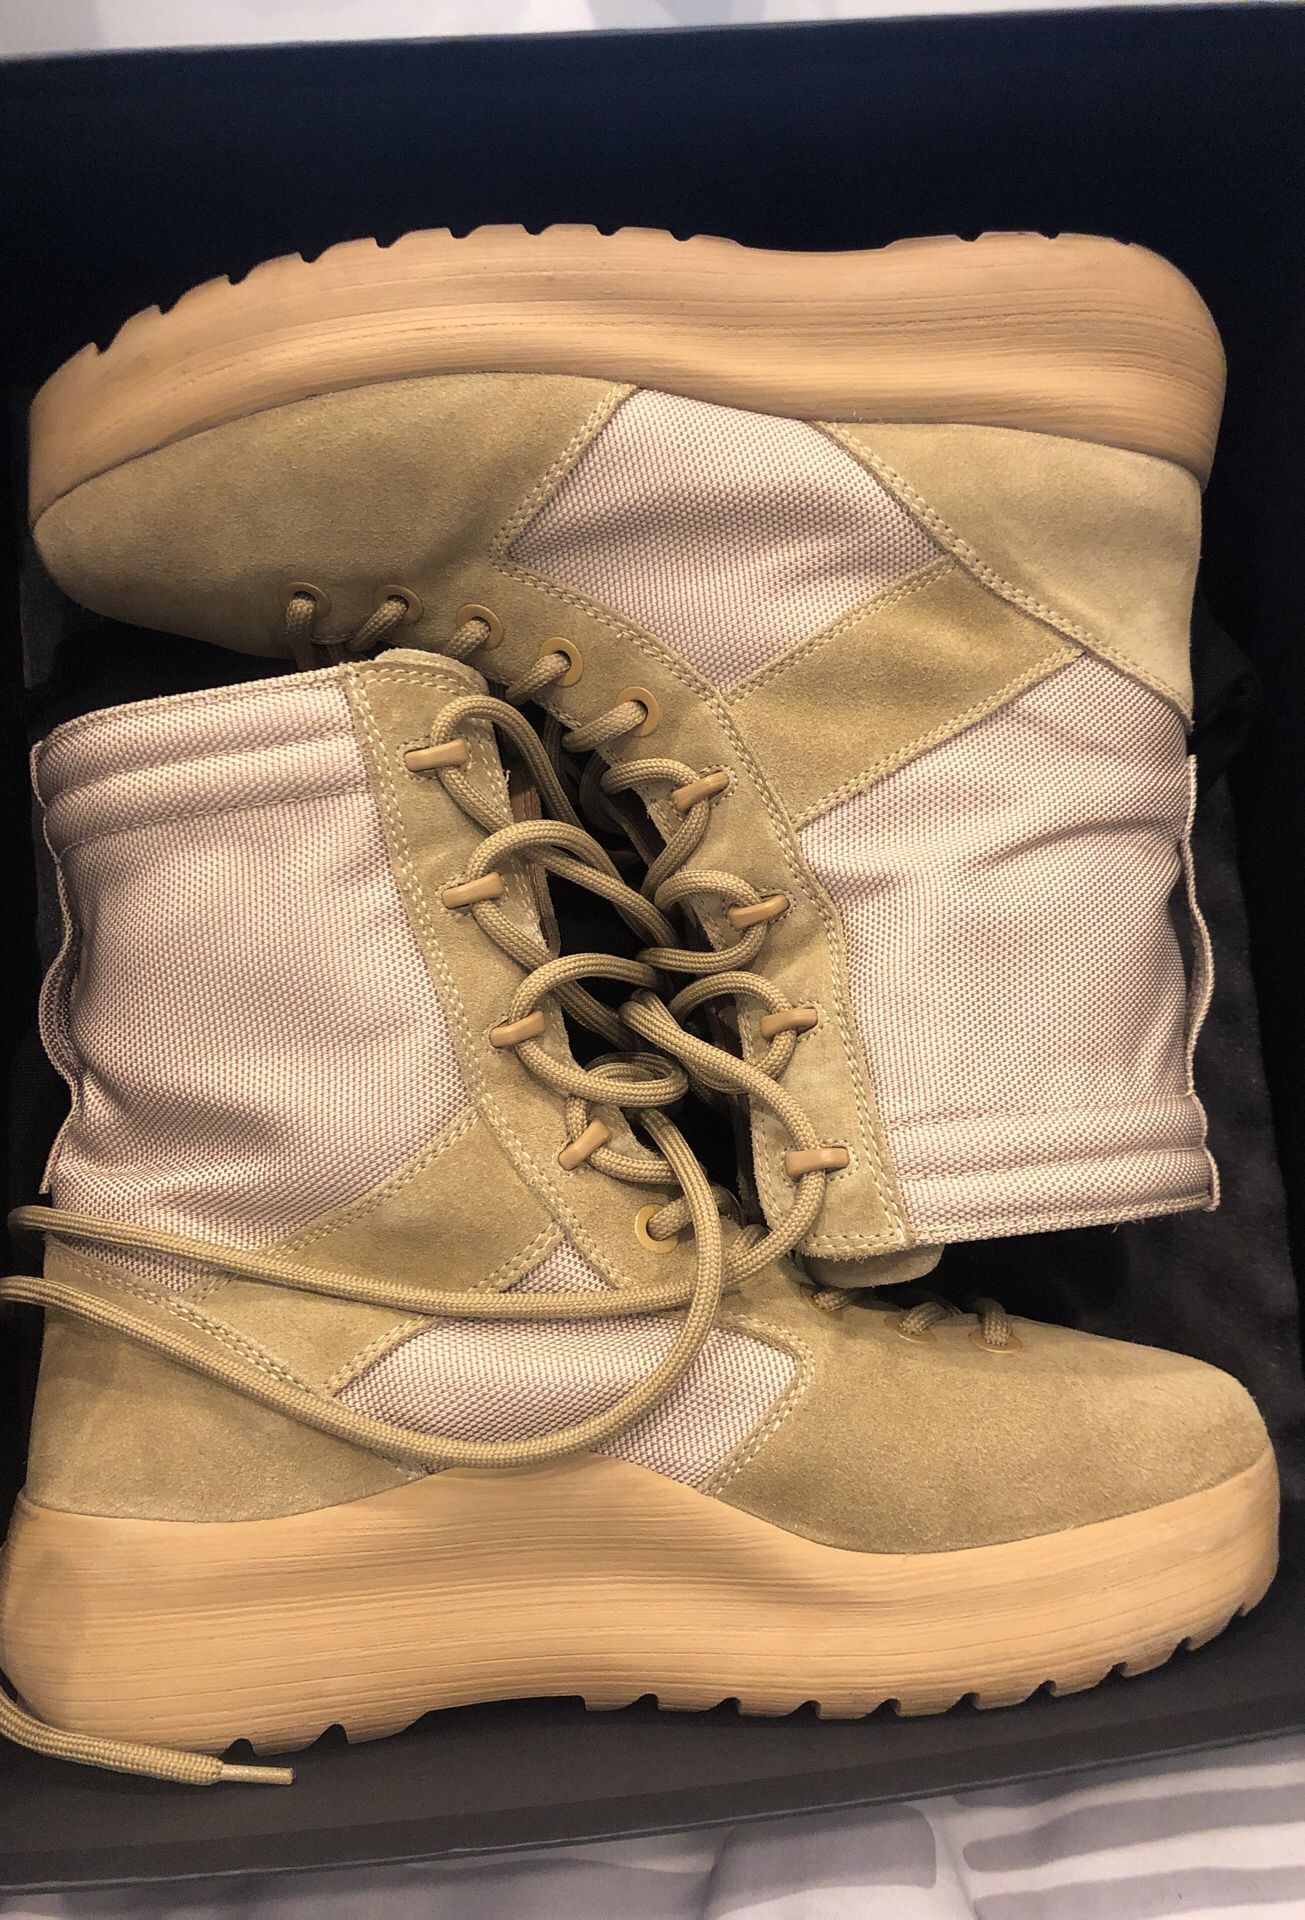 Yeezy season 3 military boots